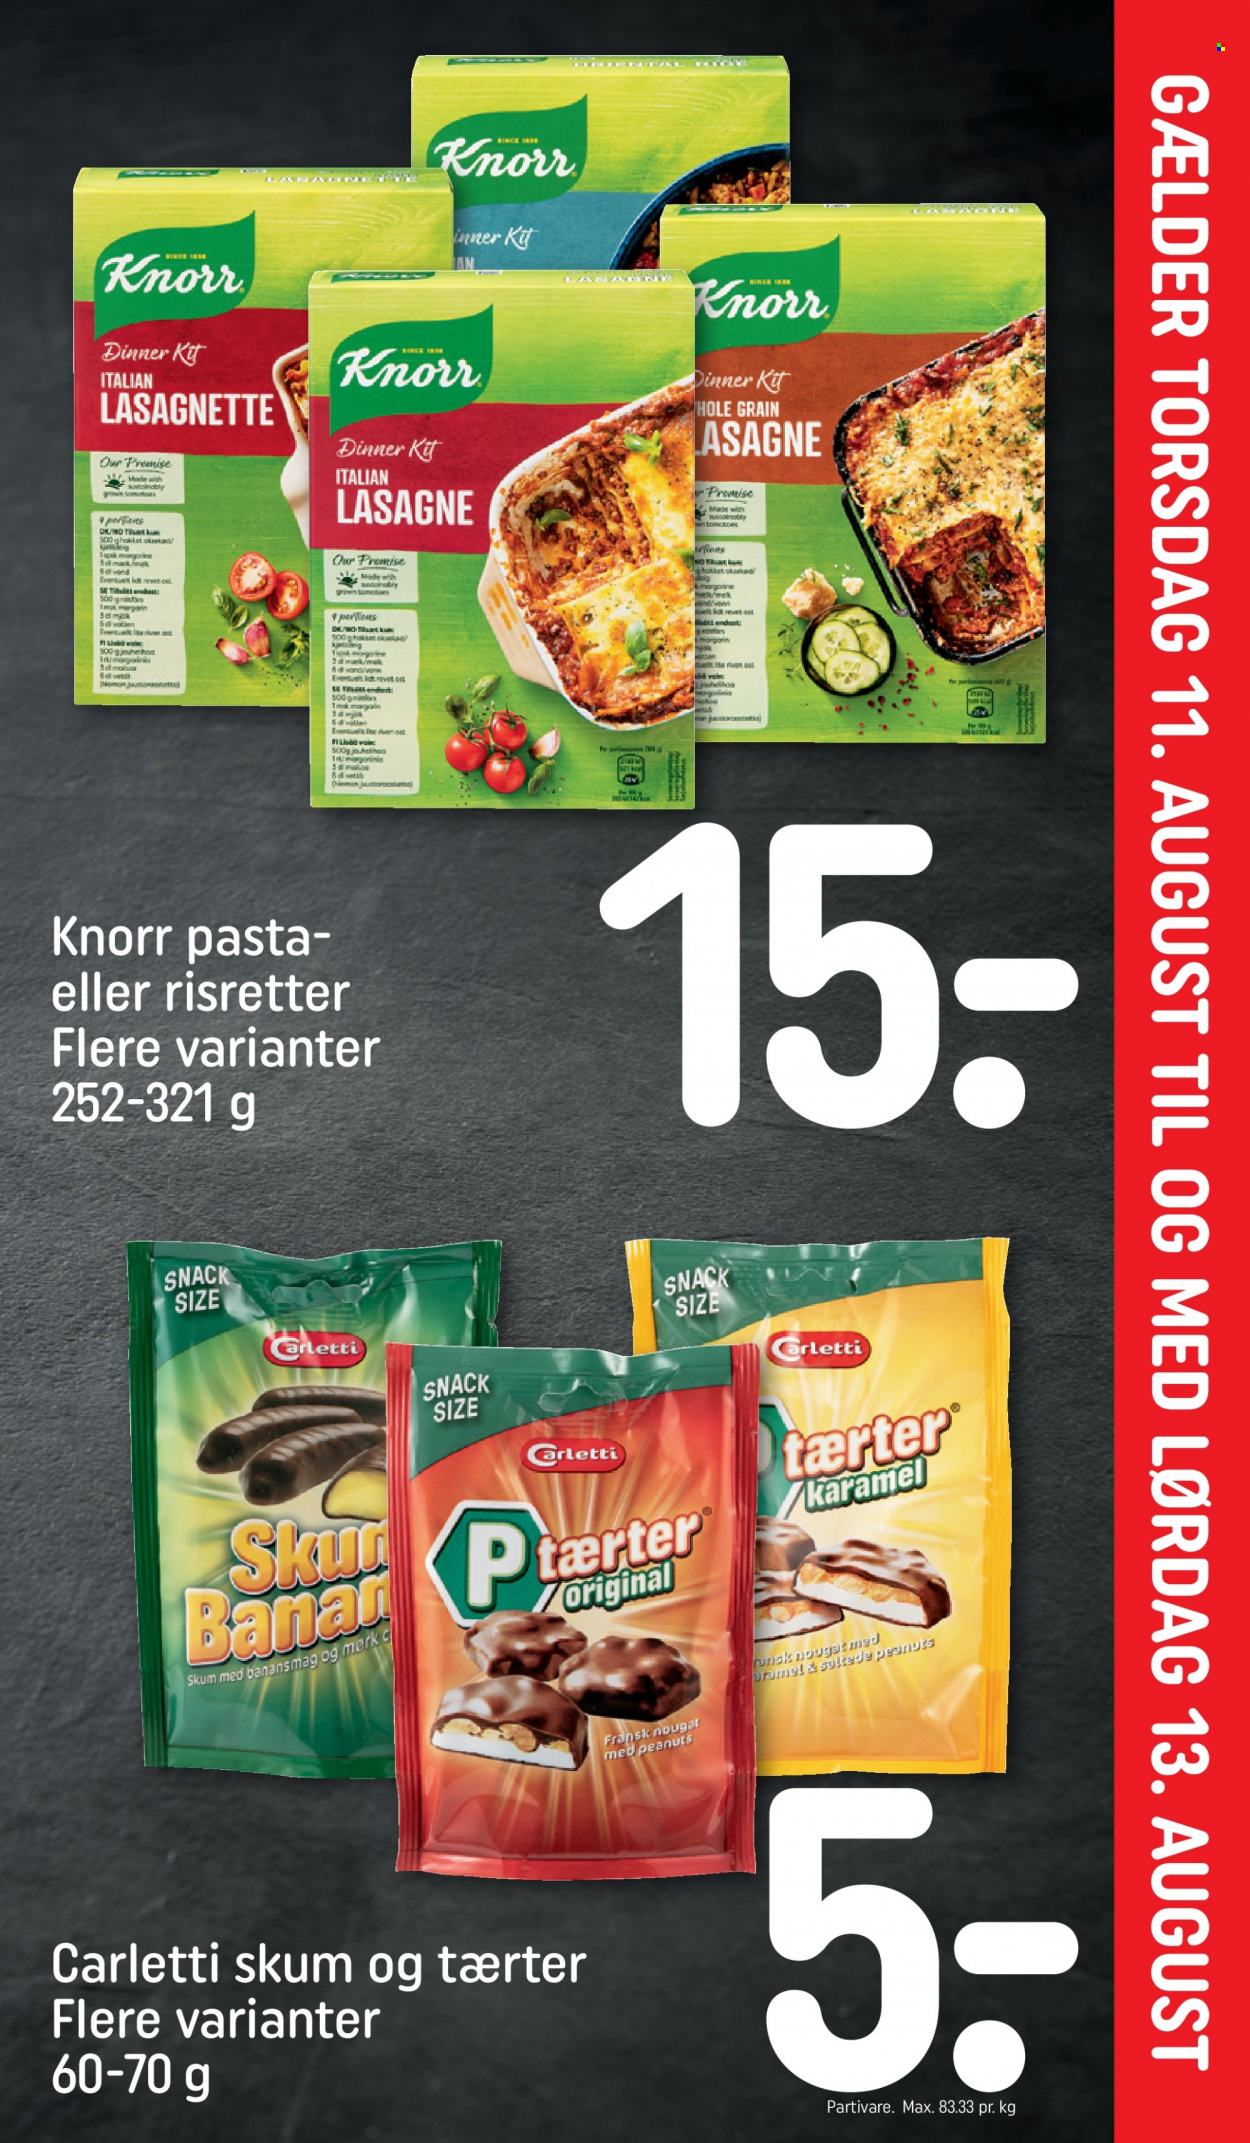 thumbnail - Rema 1000 tilbud  - 7.8.2022 - 13.8.2022 - tilbudsprodukter - Knorr, færdigretter, fransk nougat, karamel, nougat, Carletti, pasta, peanuts. Side 23.